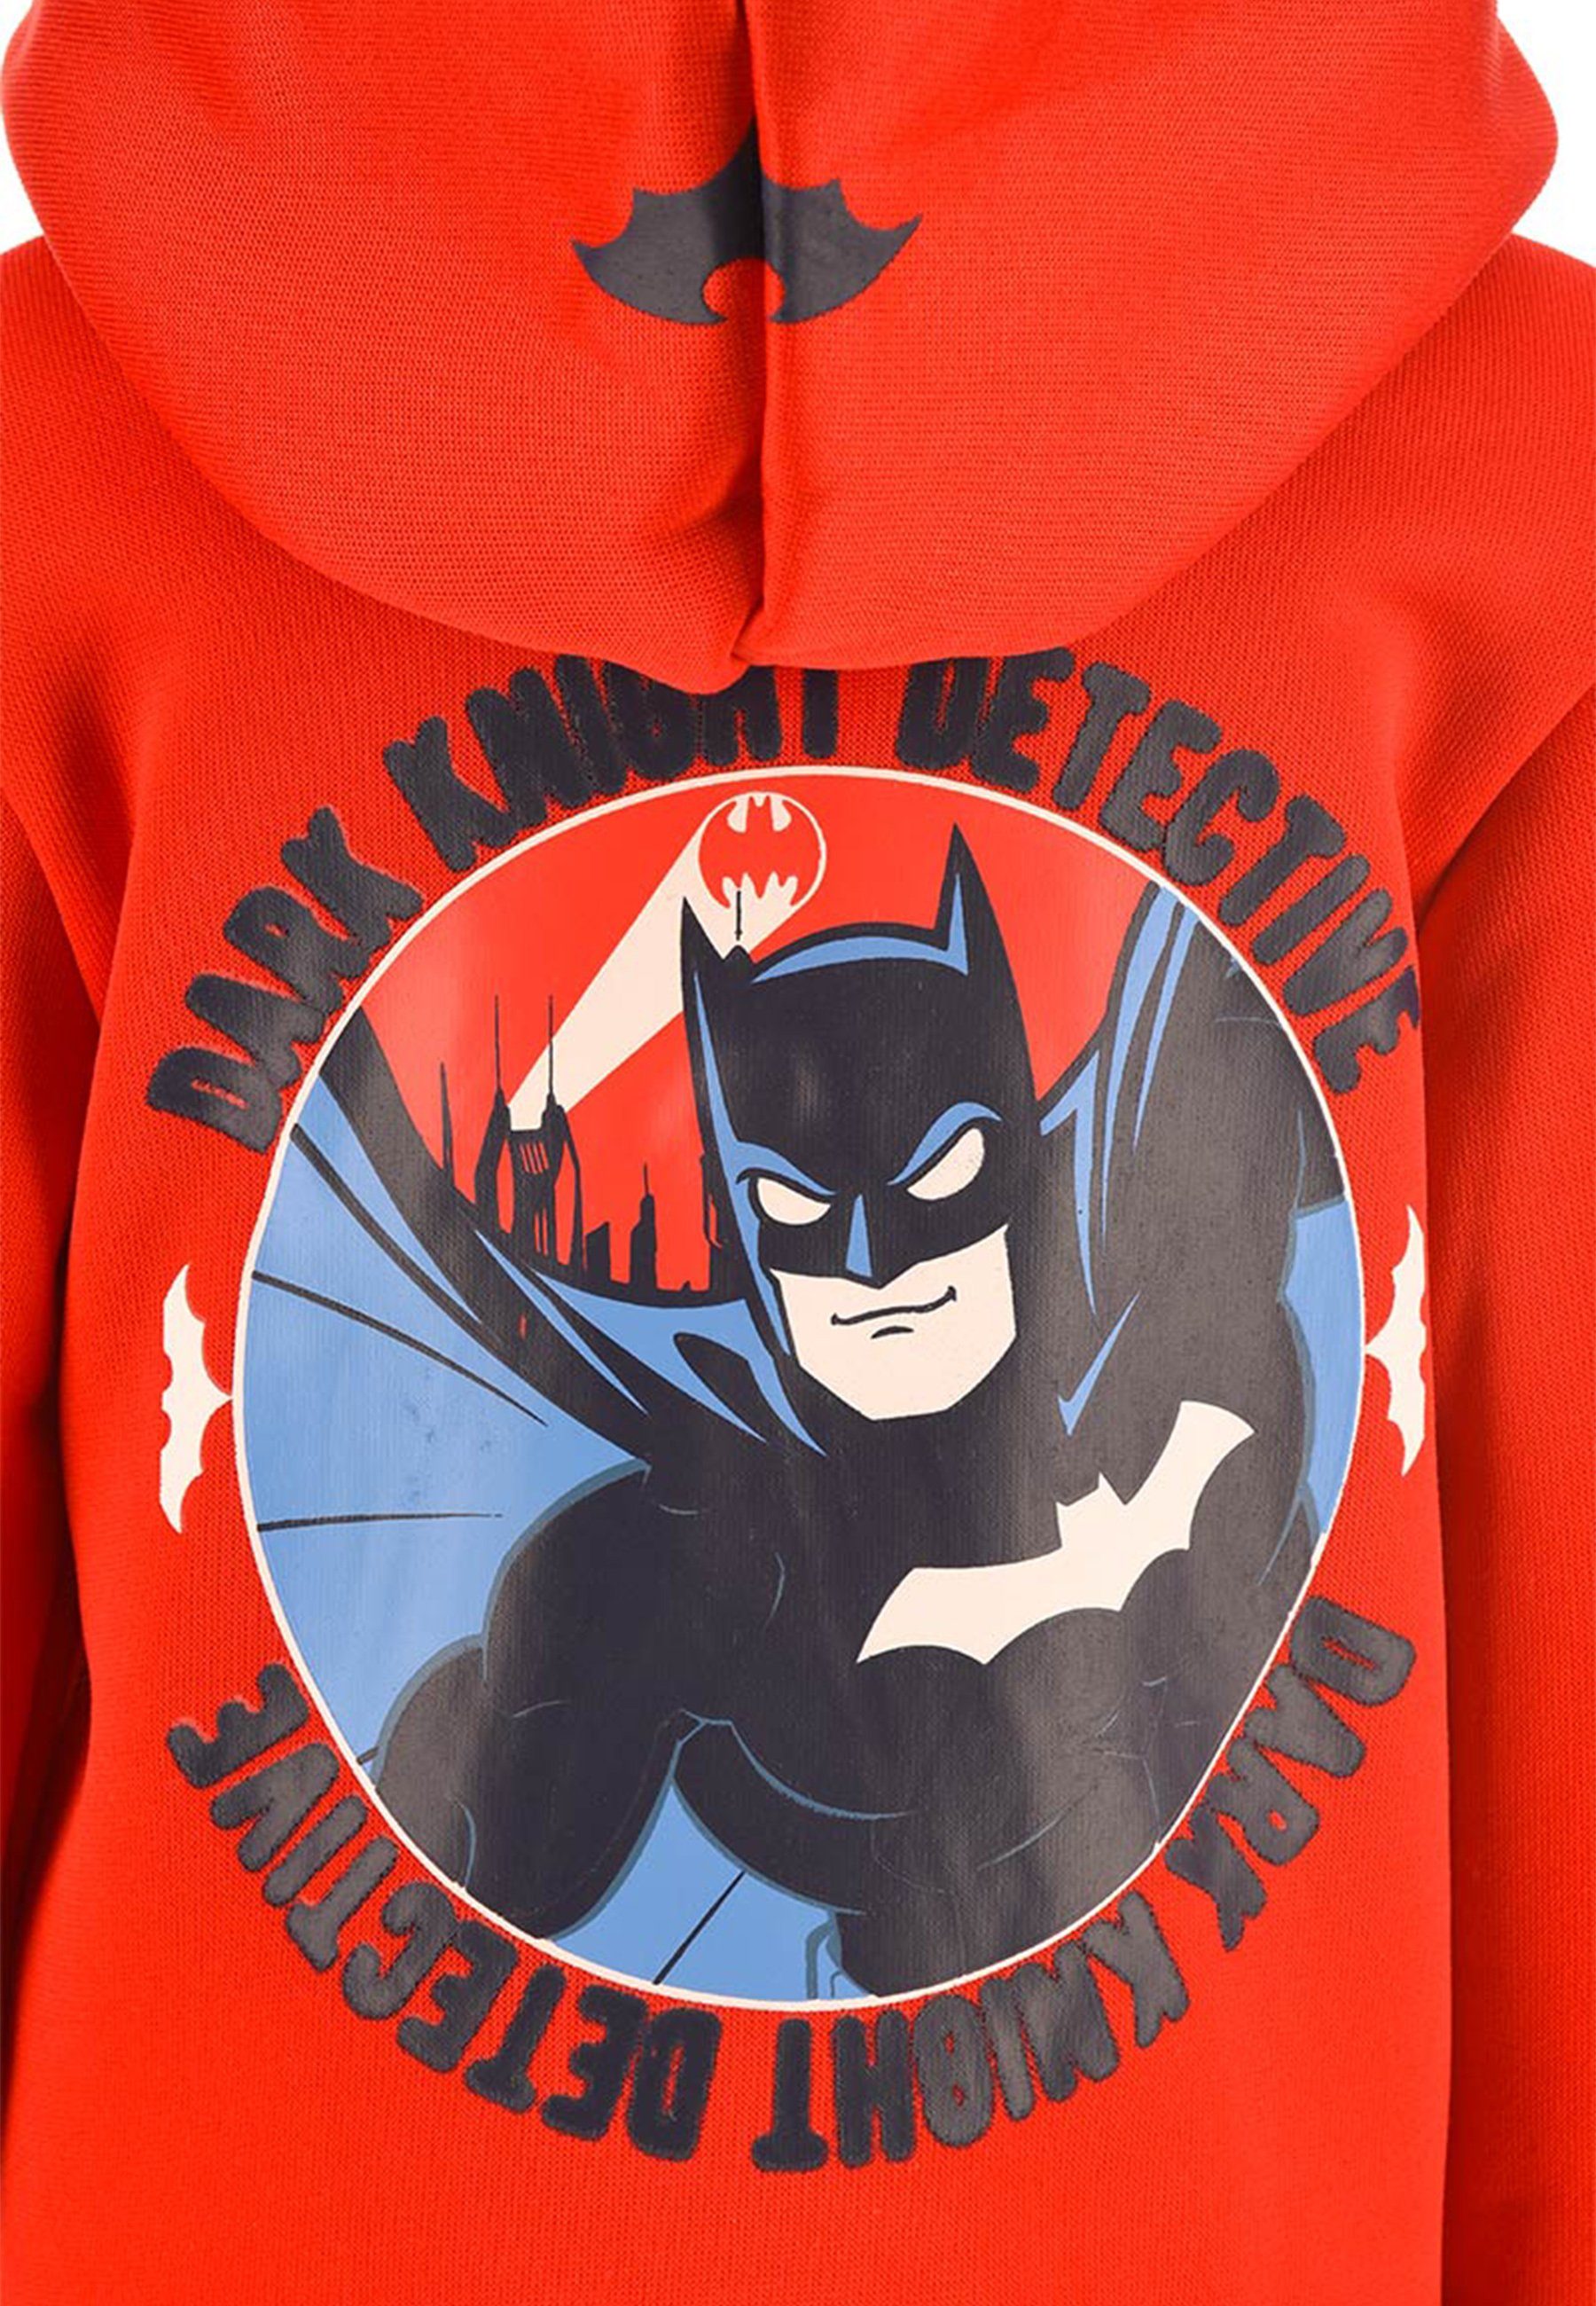 Batman Reißverschluss Hoodie Kapuzenjacke Knight Kapuzensweatjacke Pullover-Jacke Sweatjacke Rot Dirk Kapuze